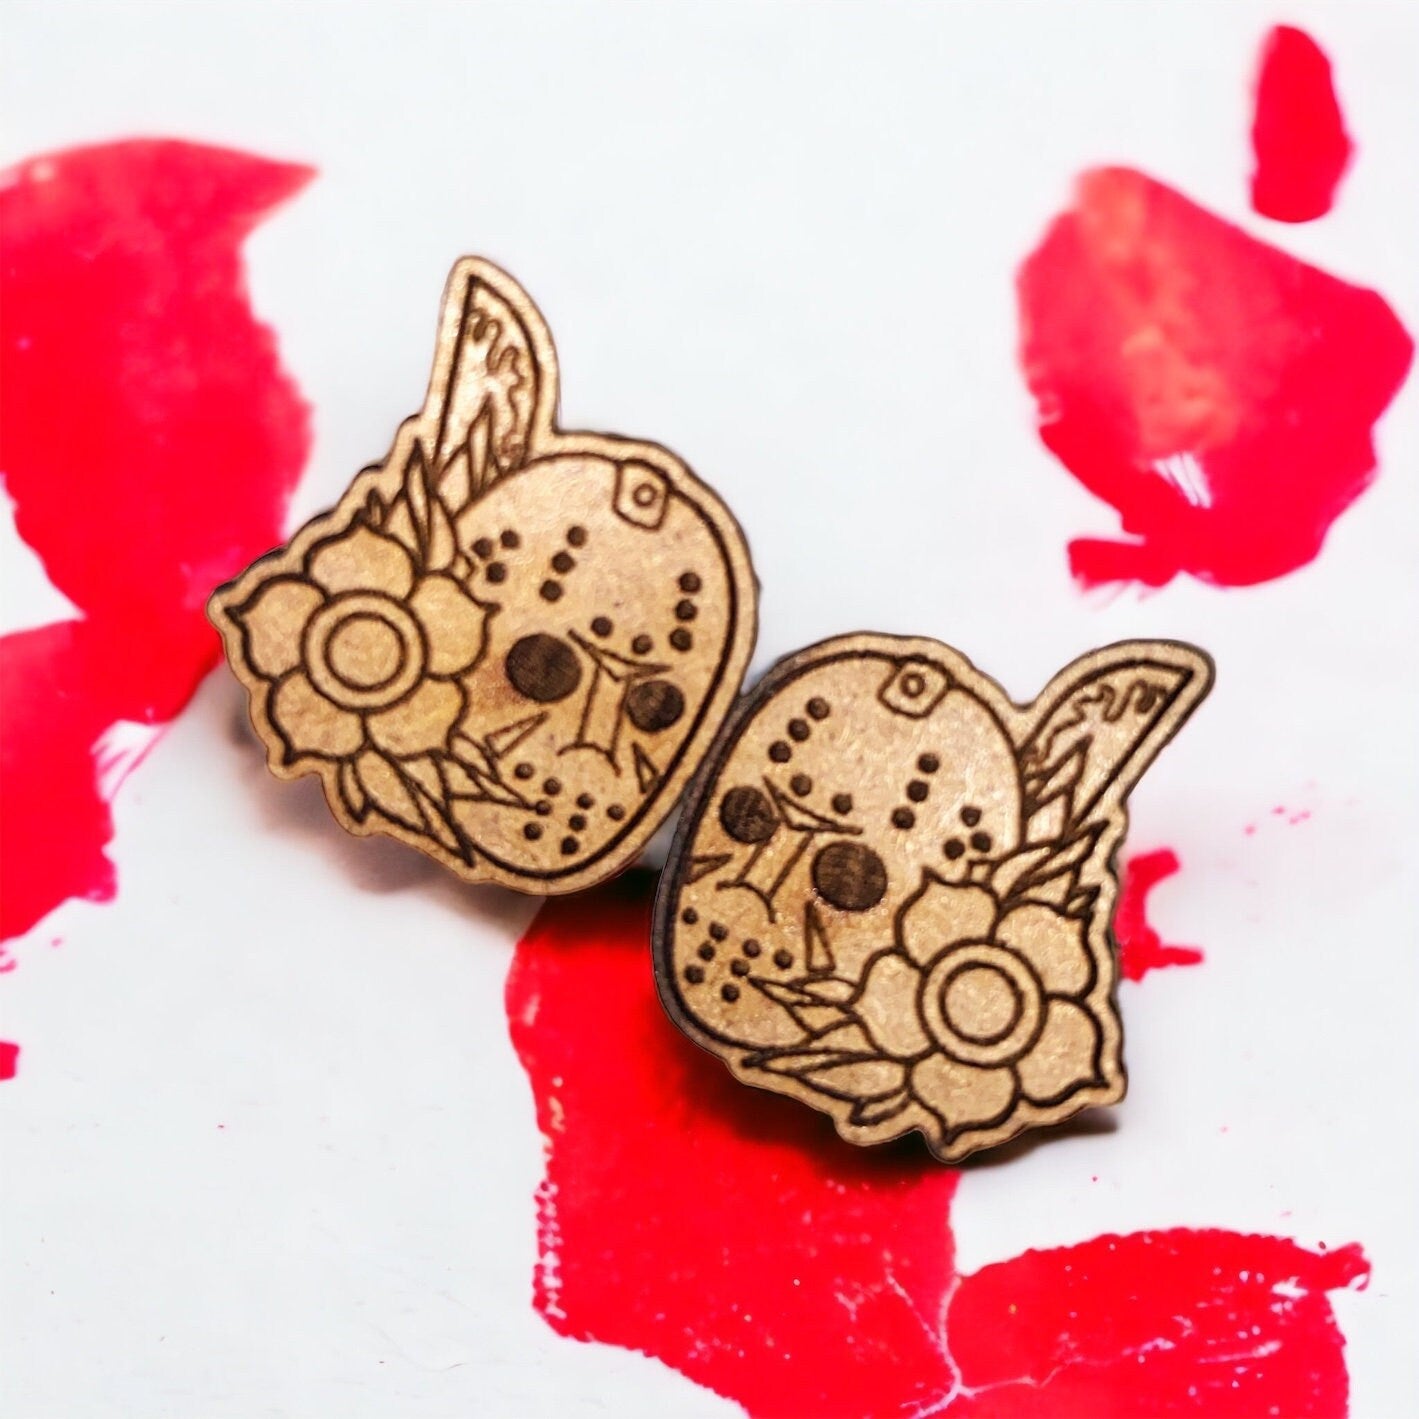 Wooden Jason Halloween Stud Earrings - Spooky Season Jewelry- Creepy Collectables - Horror Movie Earrings - Gifts For Halloween